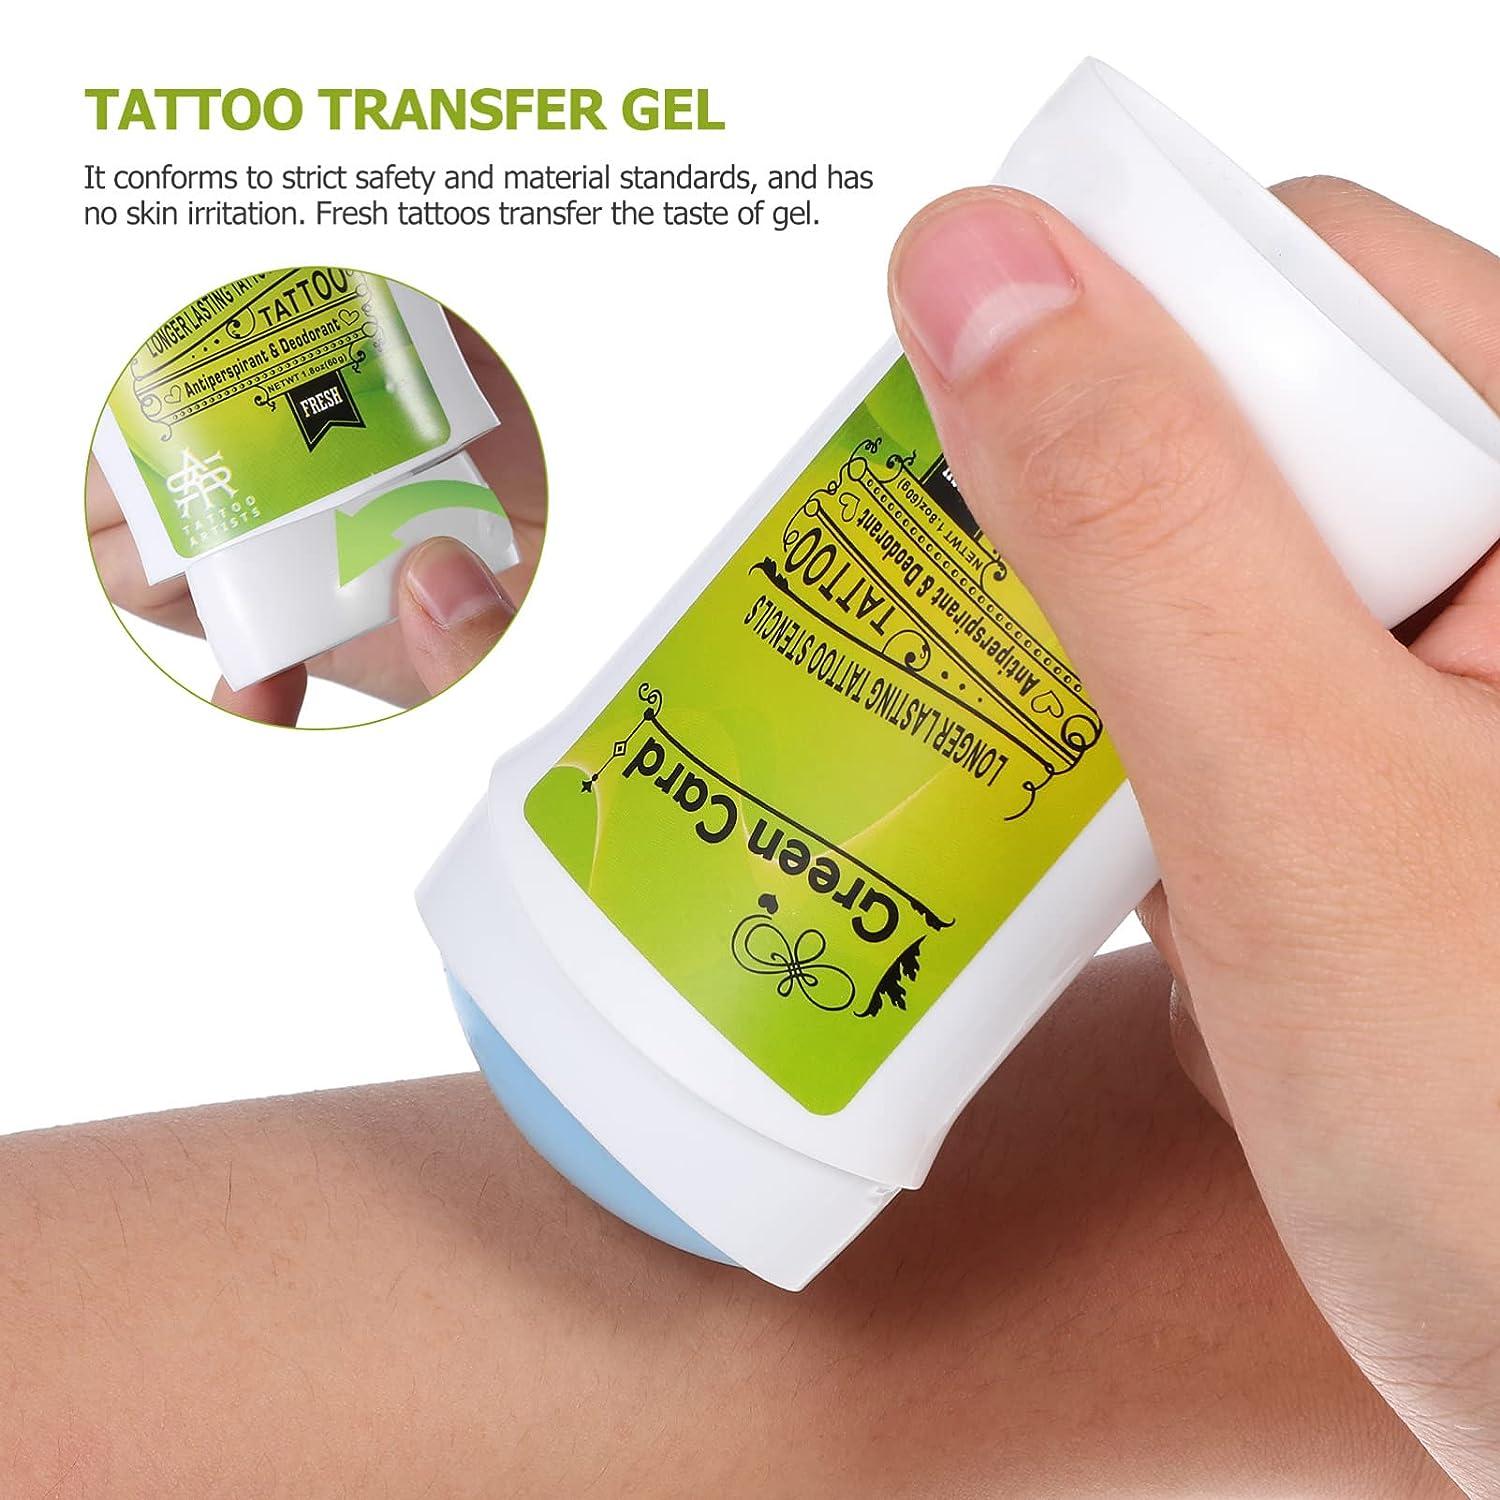 Stencil Stuff - Tattoo transfer gel to create perfect designs